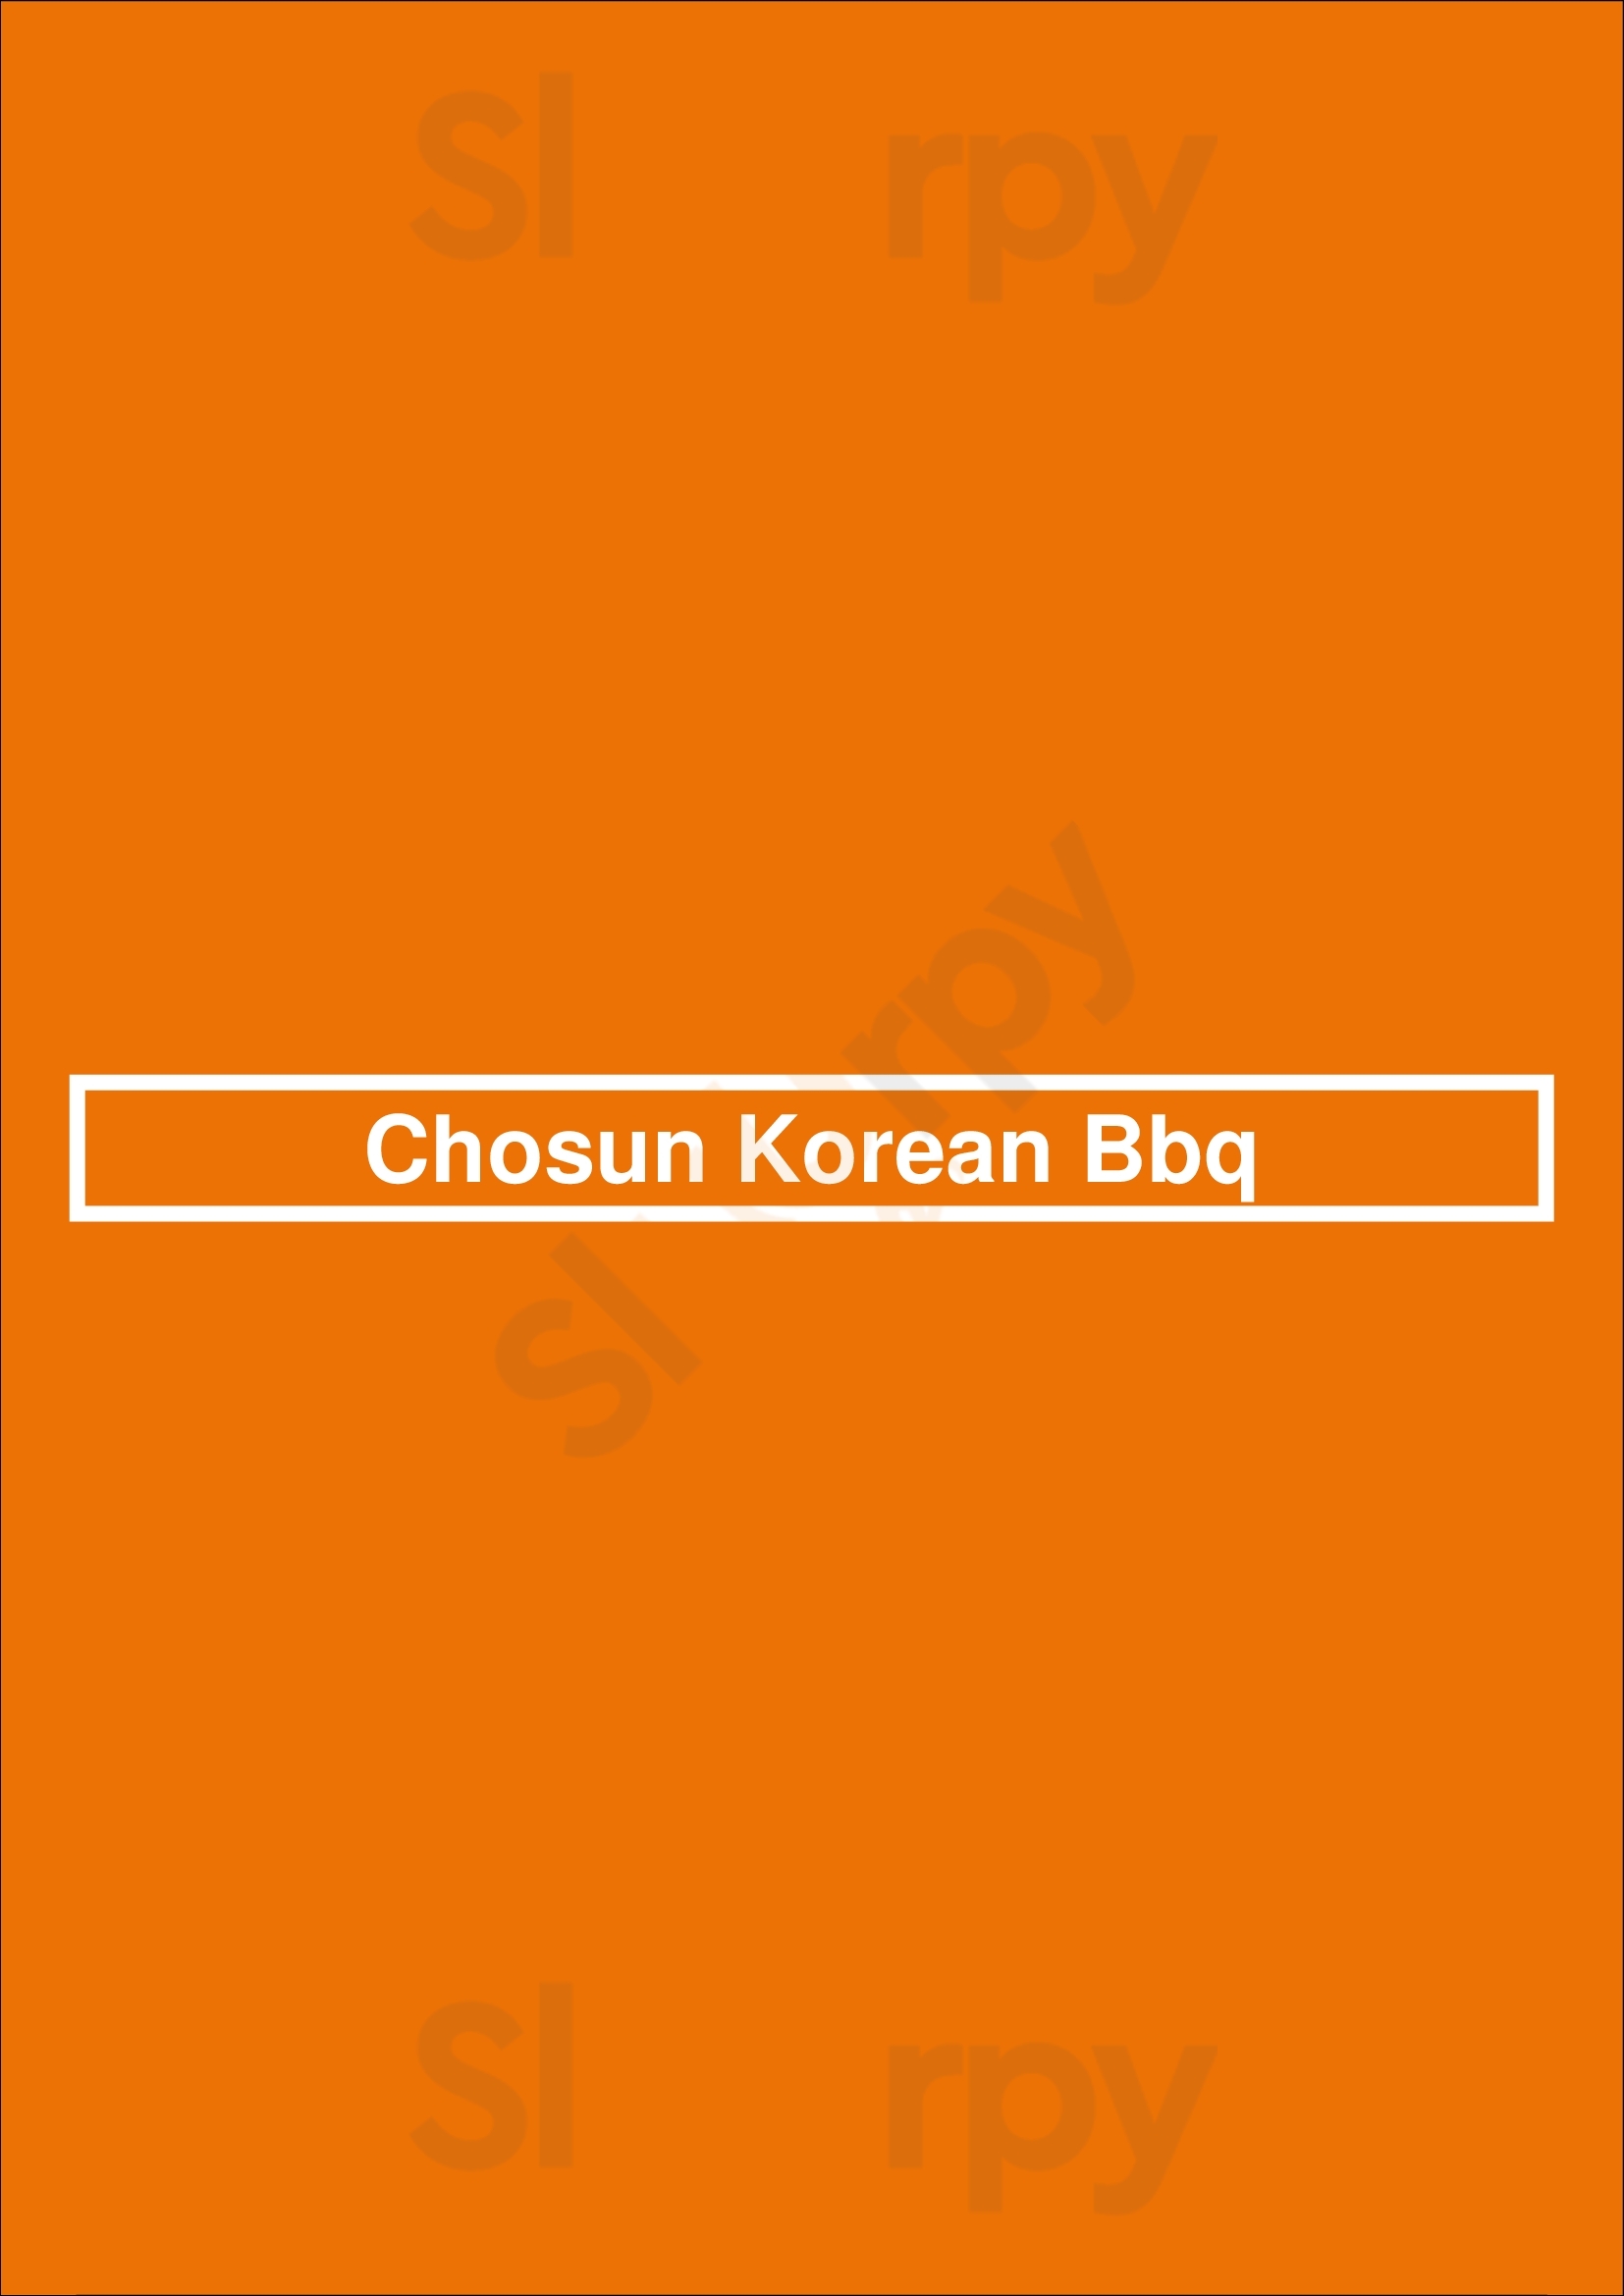 Chosun Korean Bbq Vancouver Menu - 1